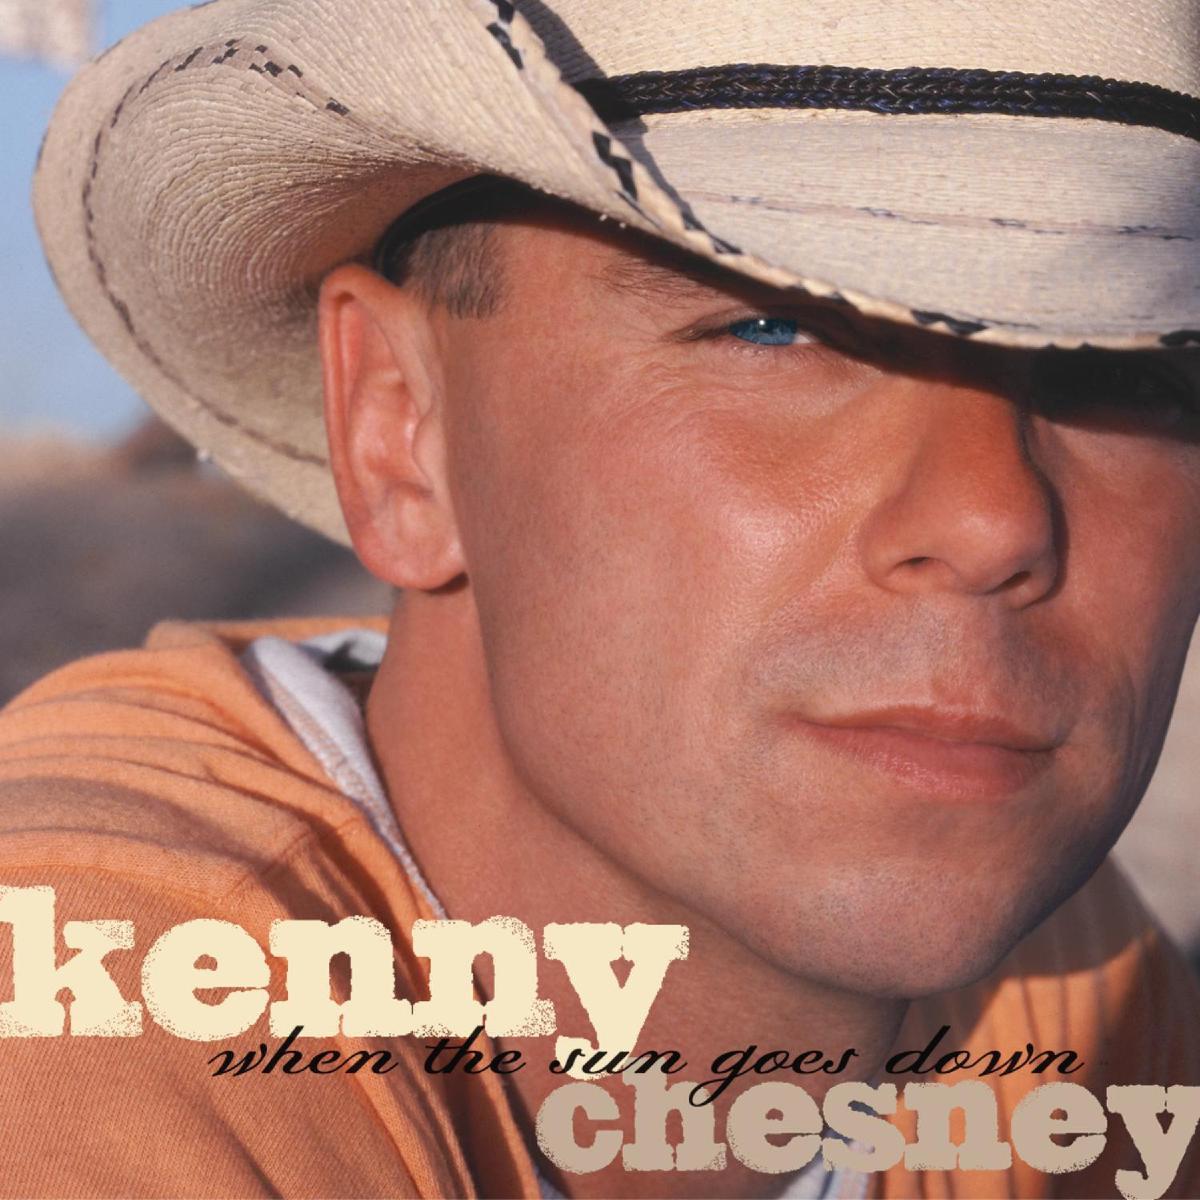 kenny chesney i go back tour review